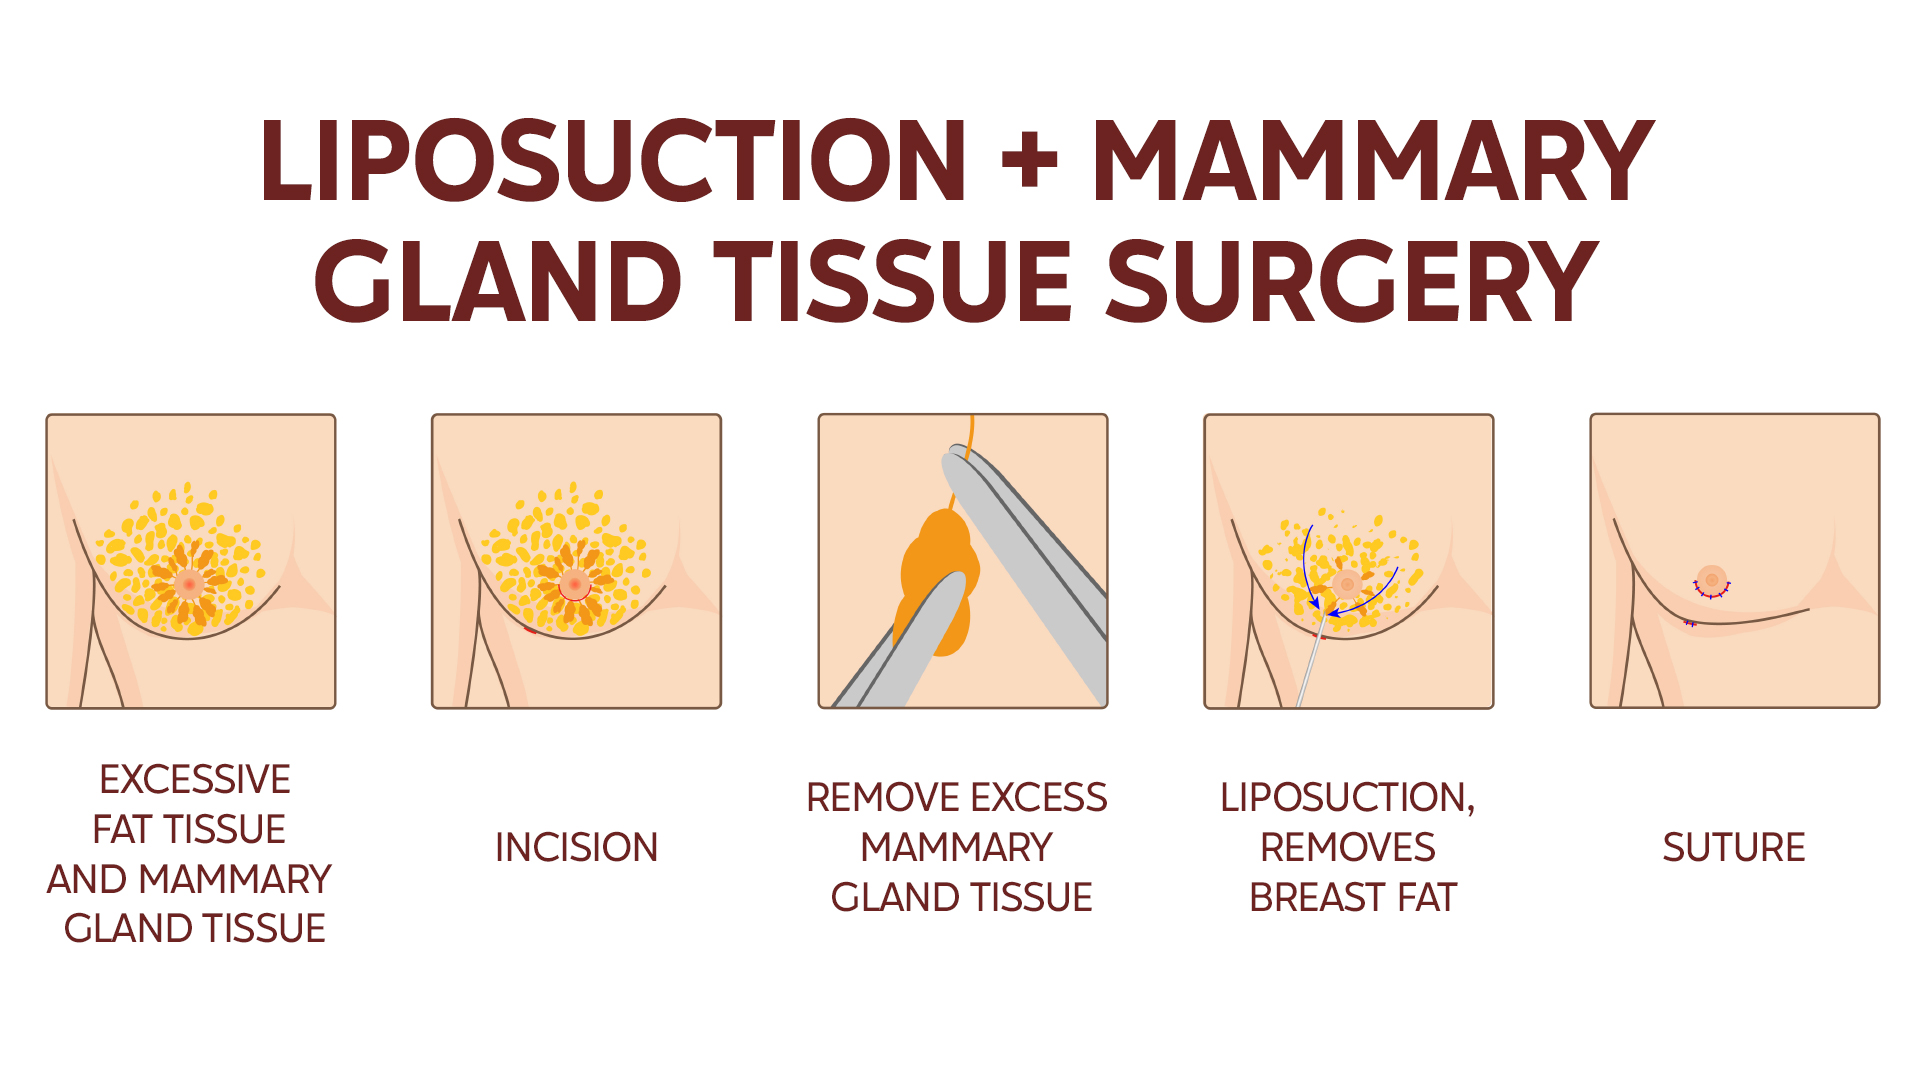 Liposuction and mastectomy gynecomastia treatment procedure